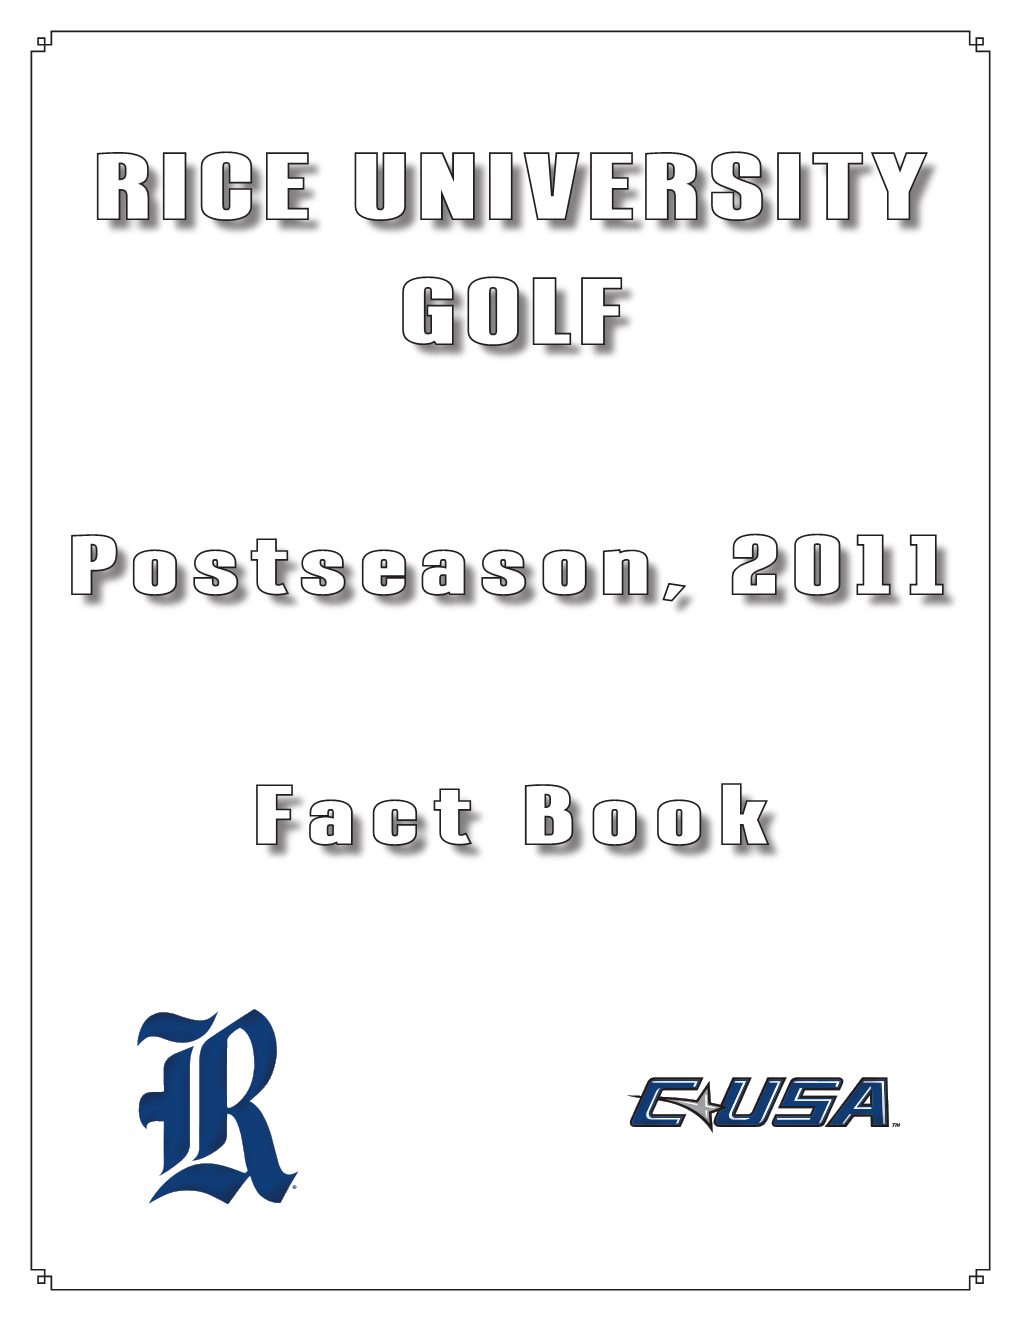 Rice University Golf